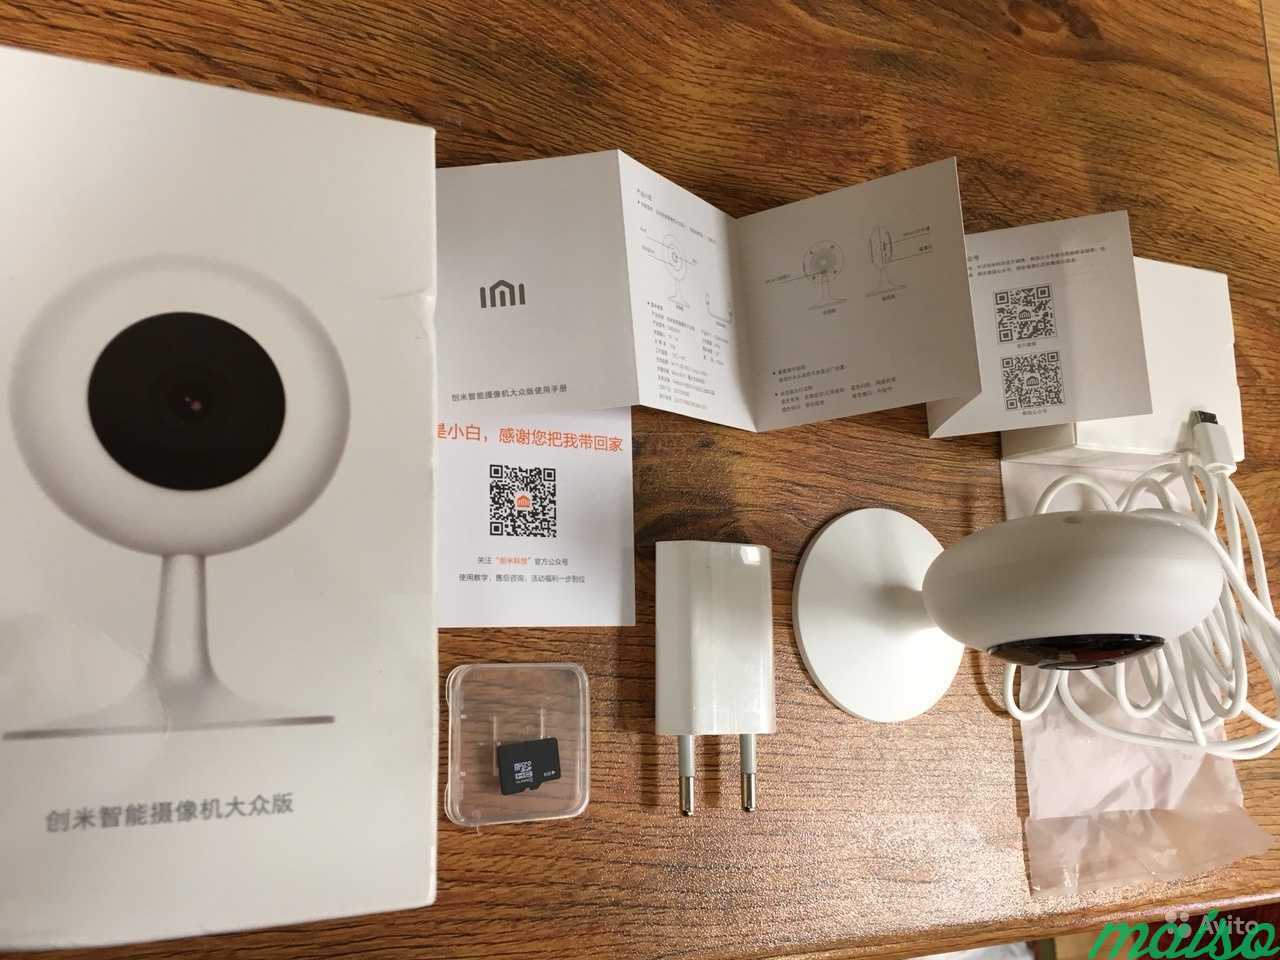 Xiaomi Hd Камера